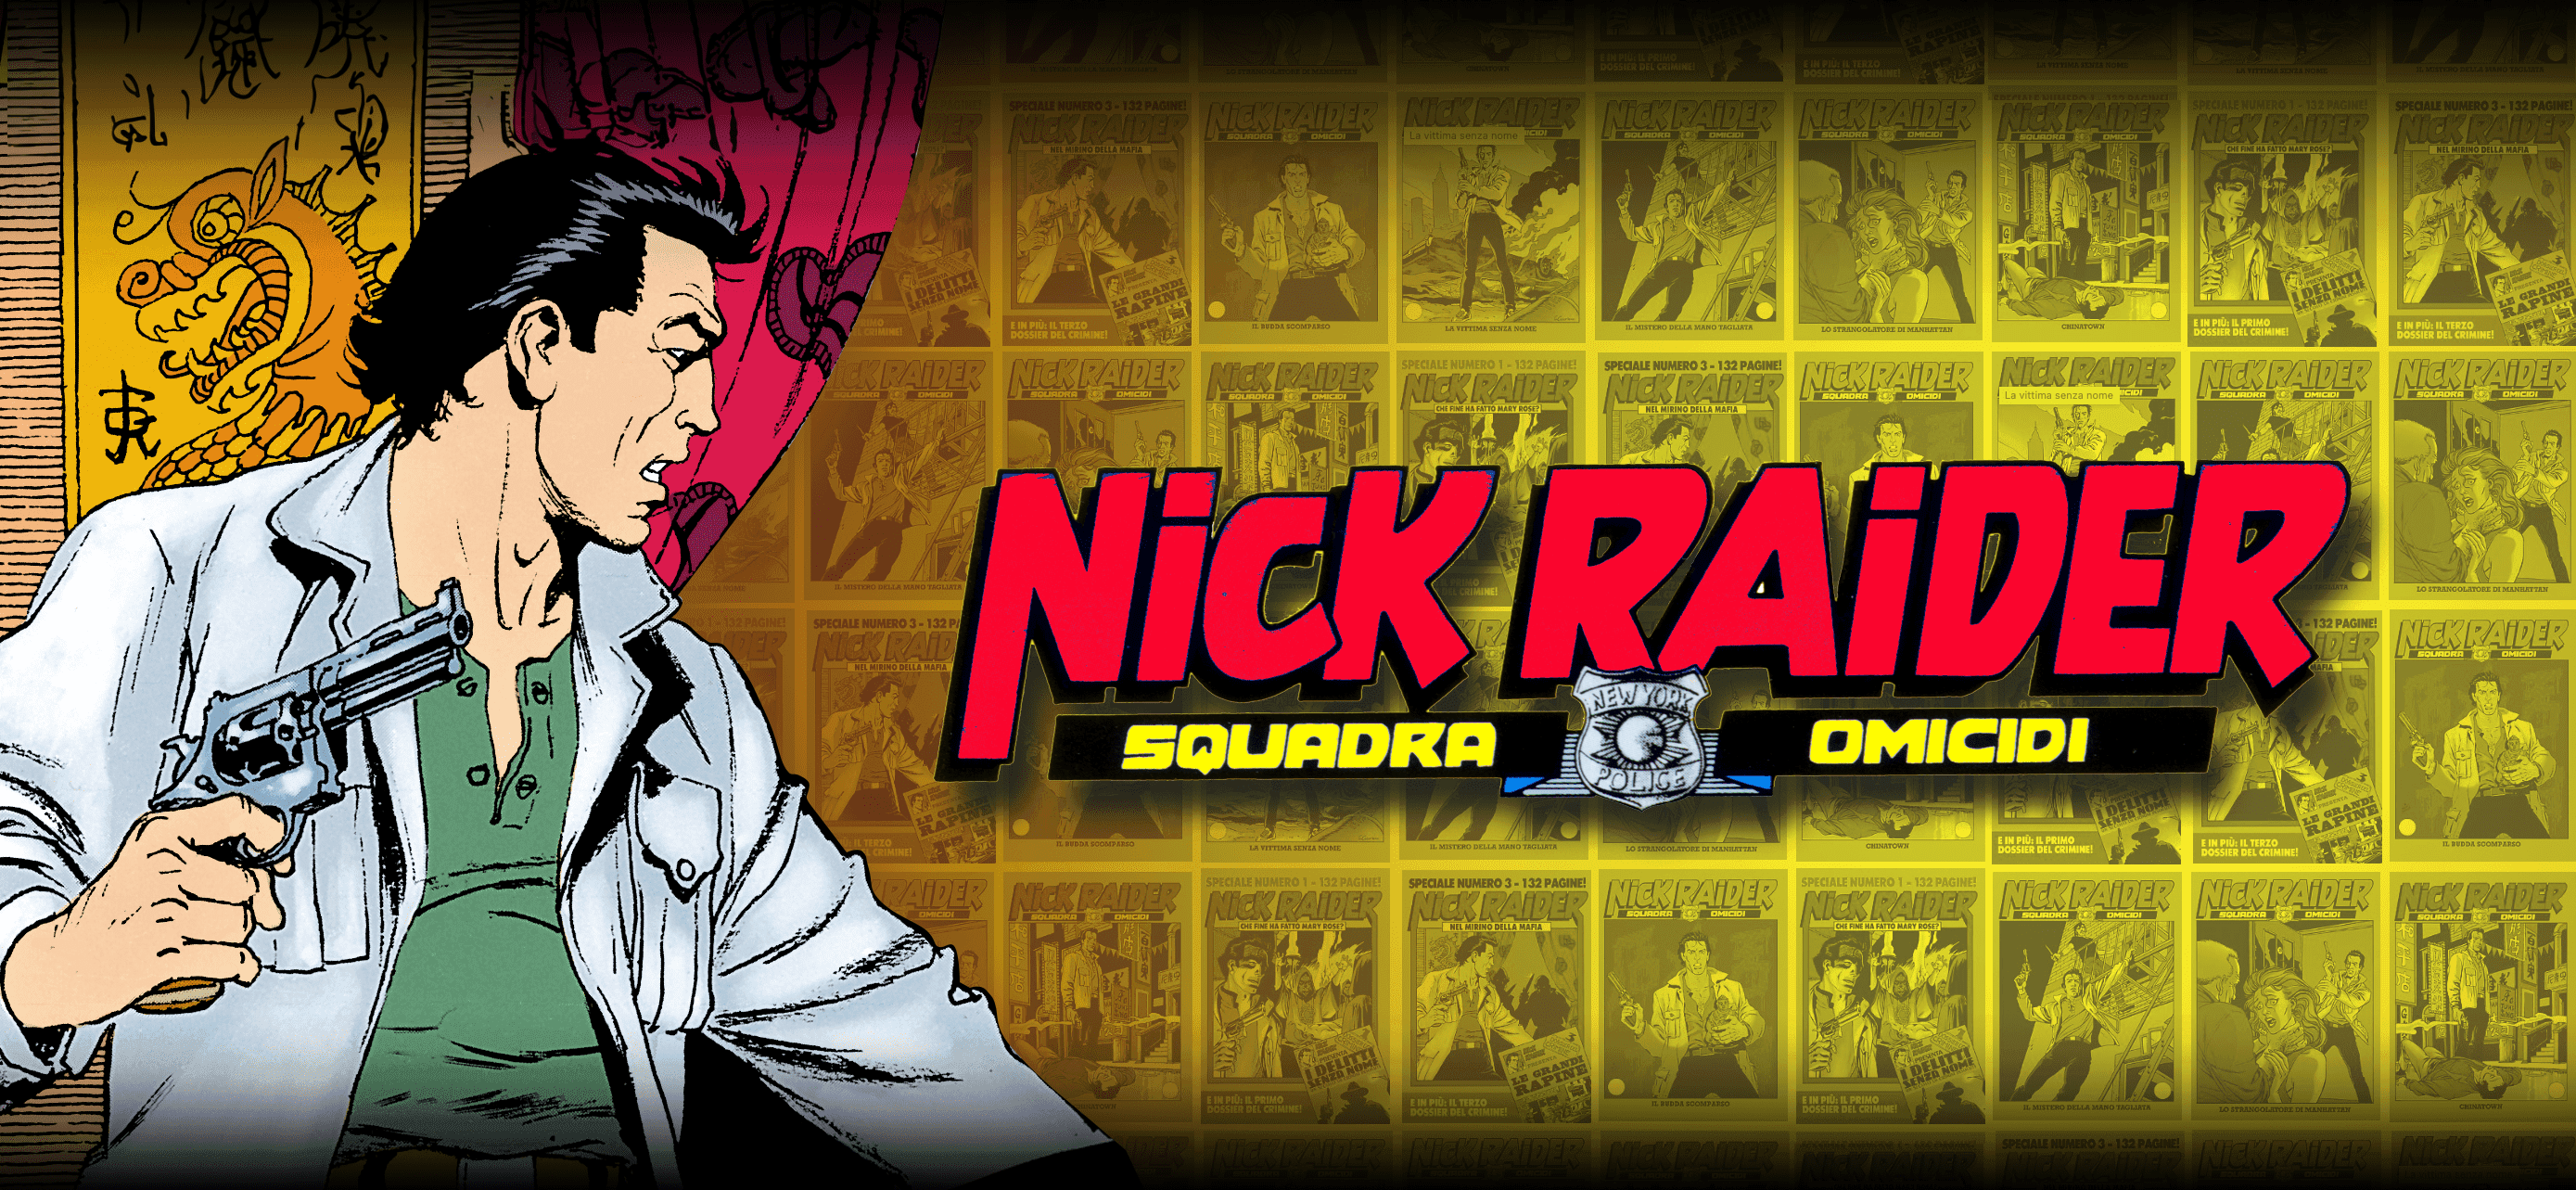 Benvenuto, Nick Raider!